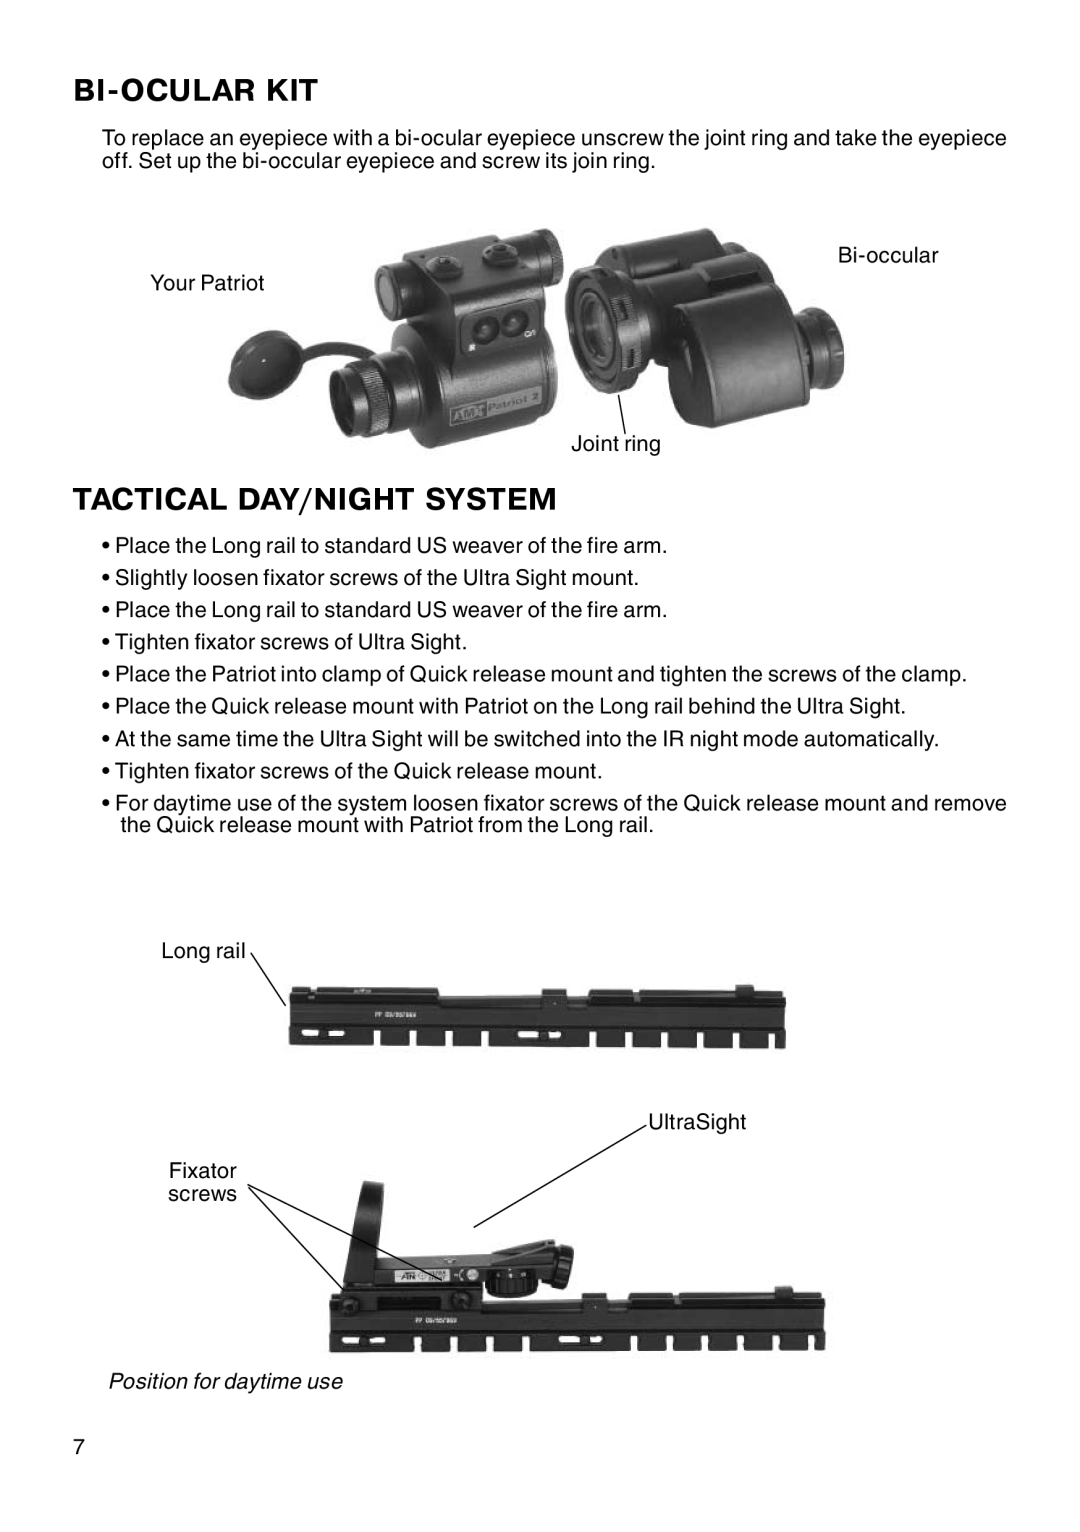 ATN Night Patriot manual Bi-Ocularkit, Tactical Day/Night System 